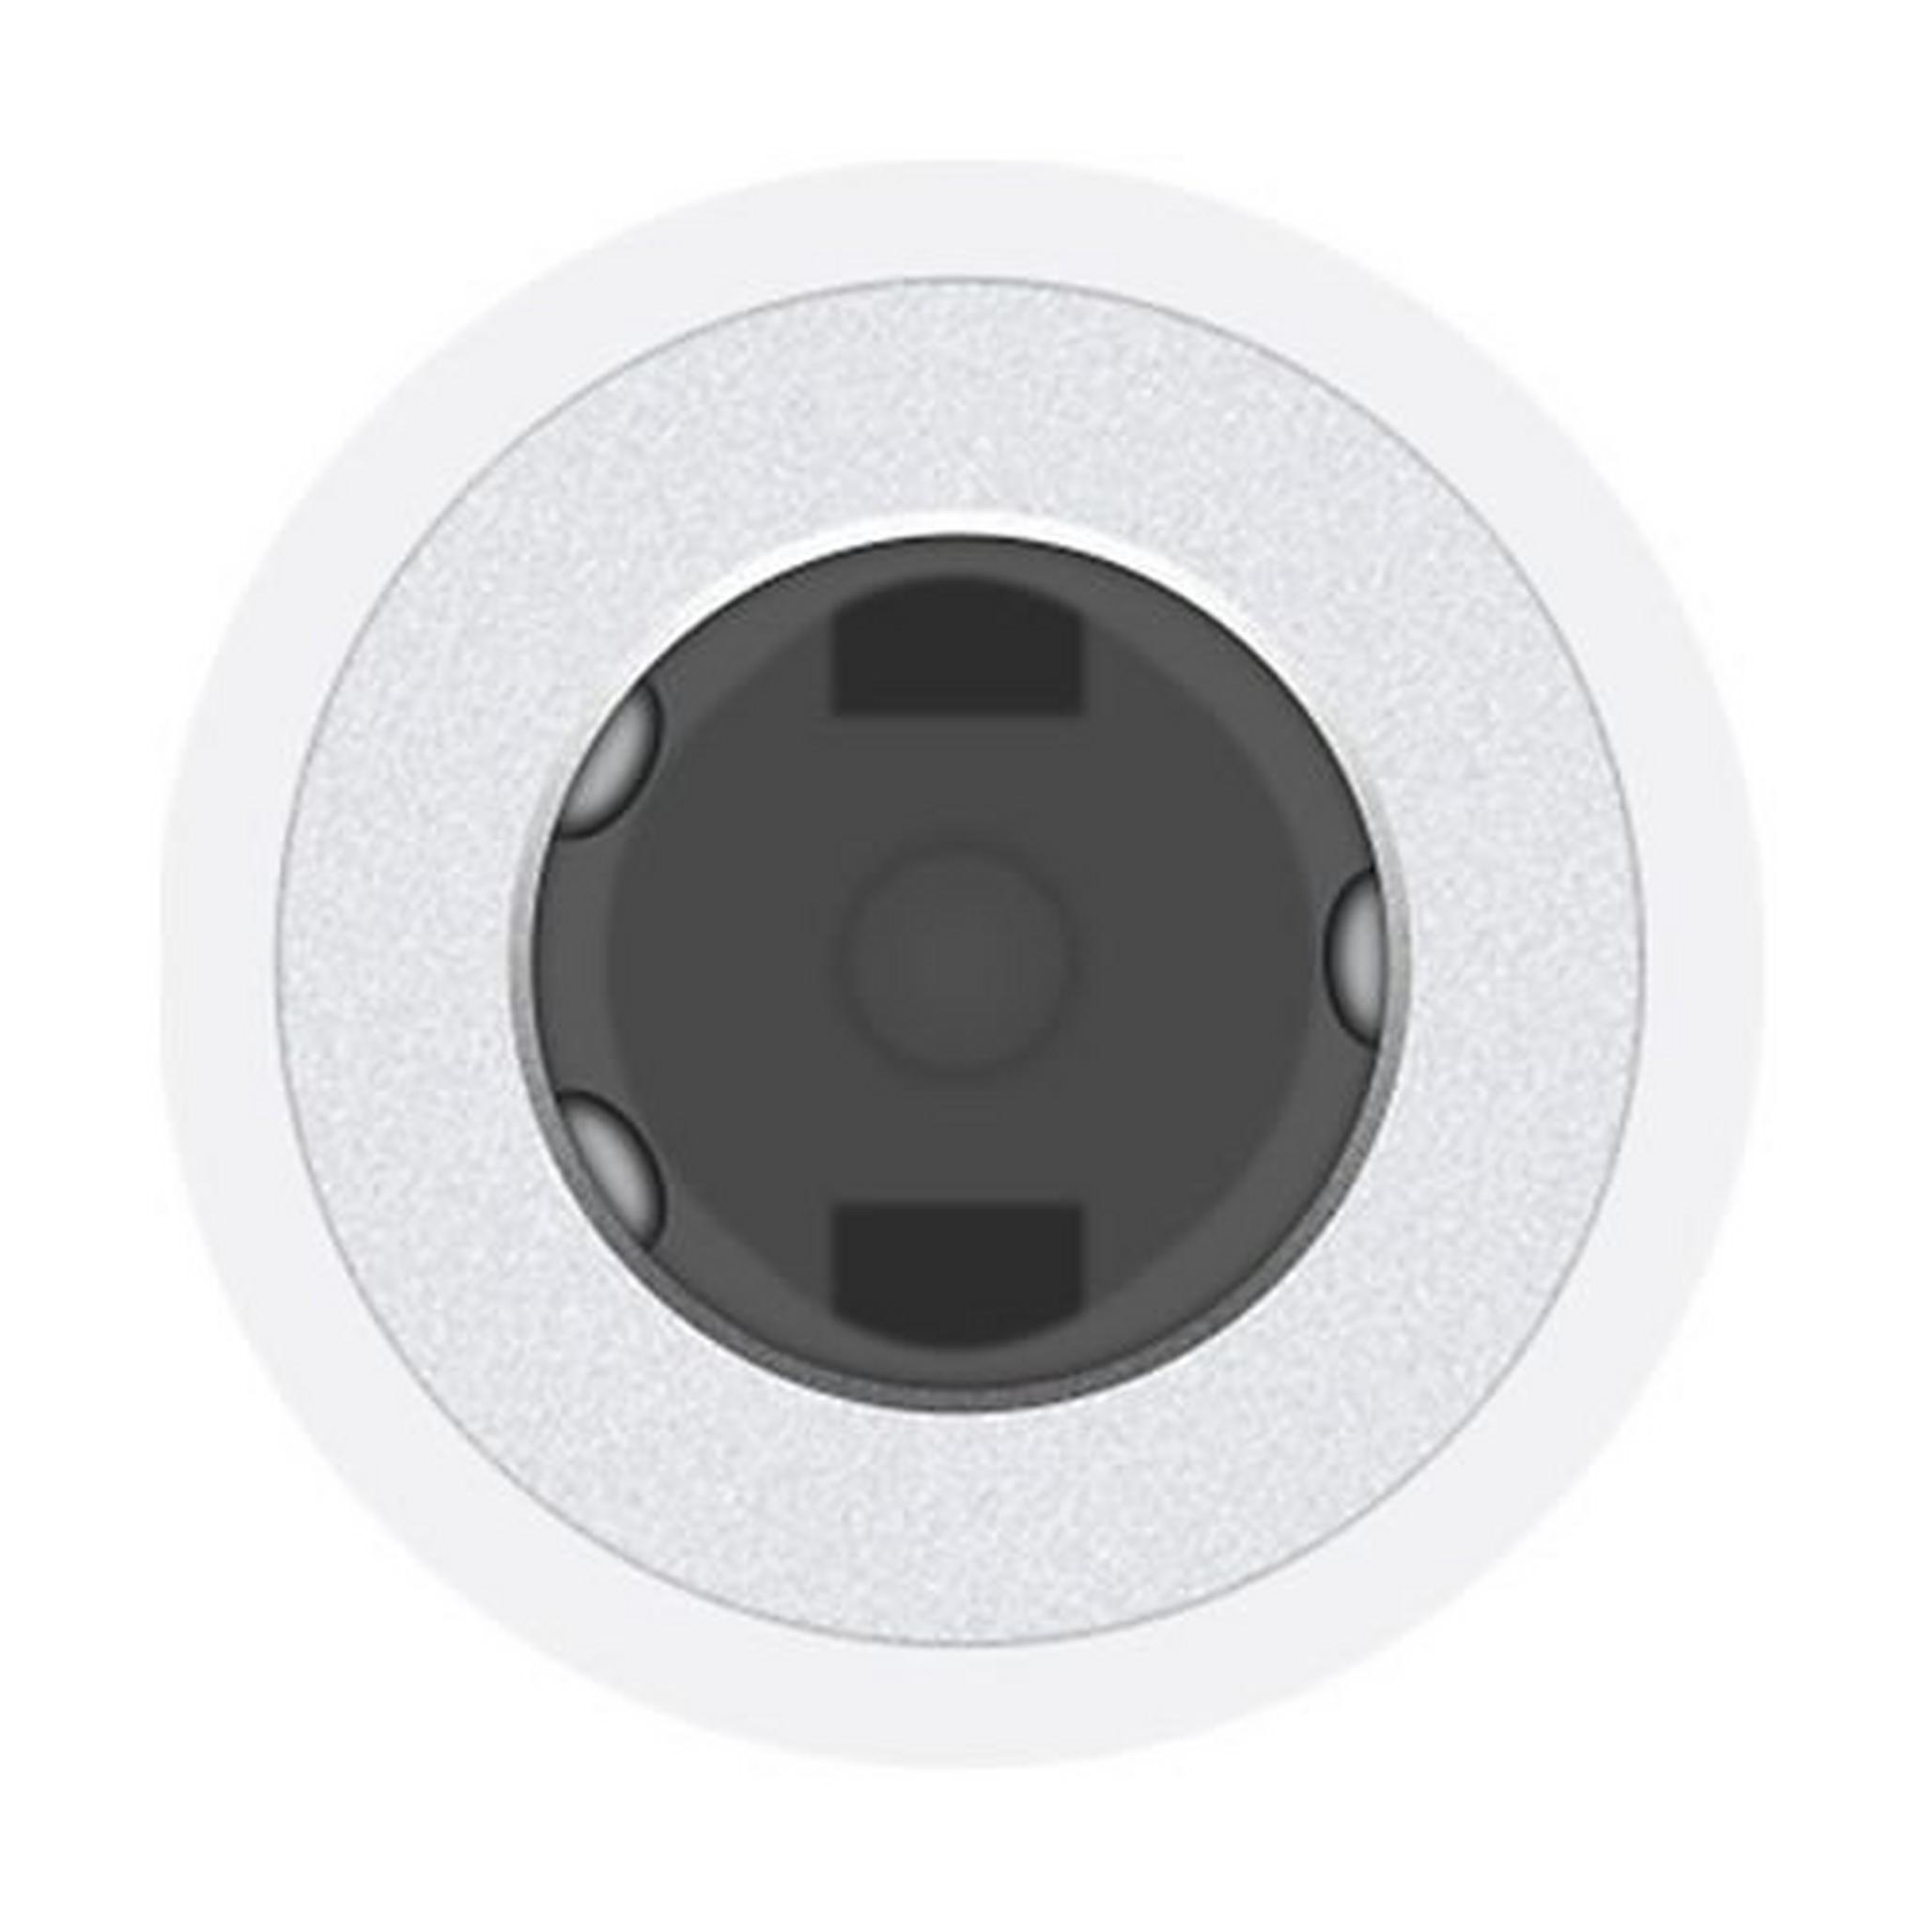 Apple Lightning To 3.5 Mm Headphone Jack Adapter (MMX62ZM/A) – White